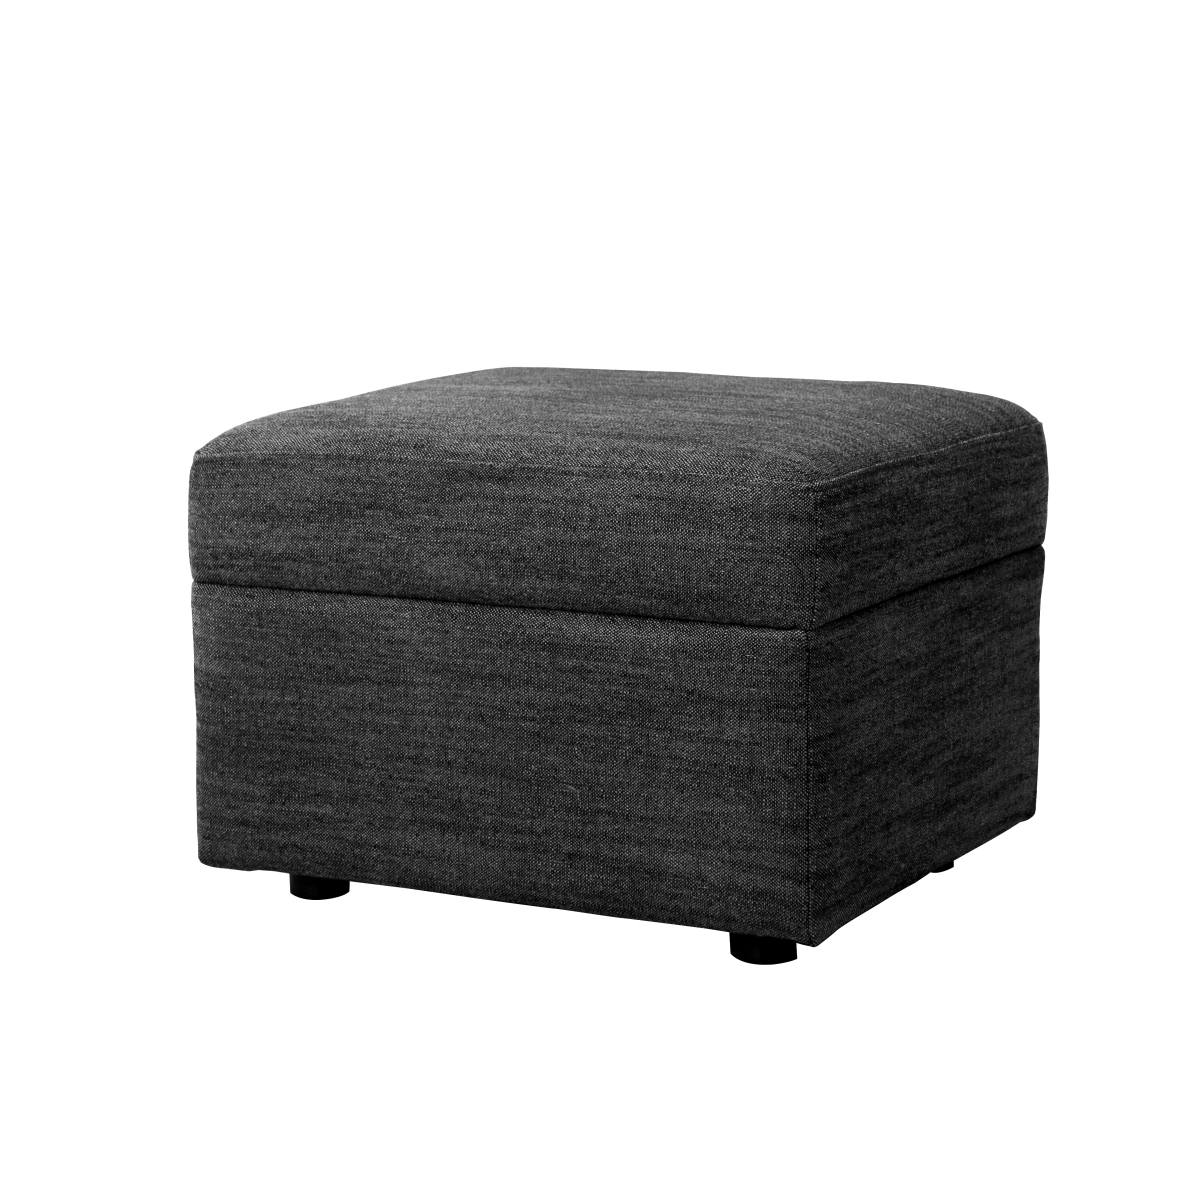 15 x 20.5 x 17.5 in. Soho Upholstered Comfort Ottoman, Dark Grey -  KD Pecho, KD3235024